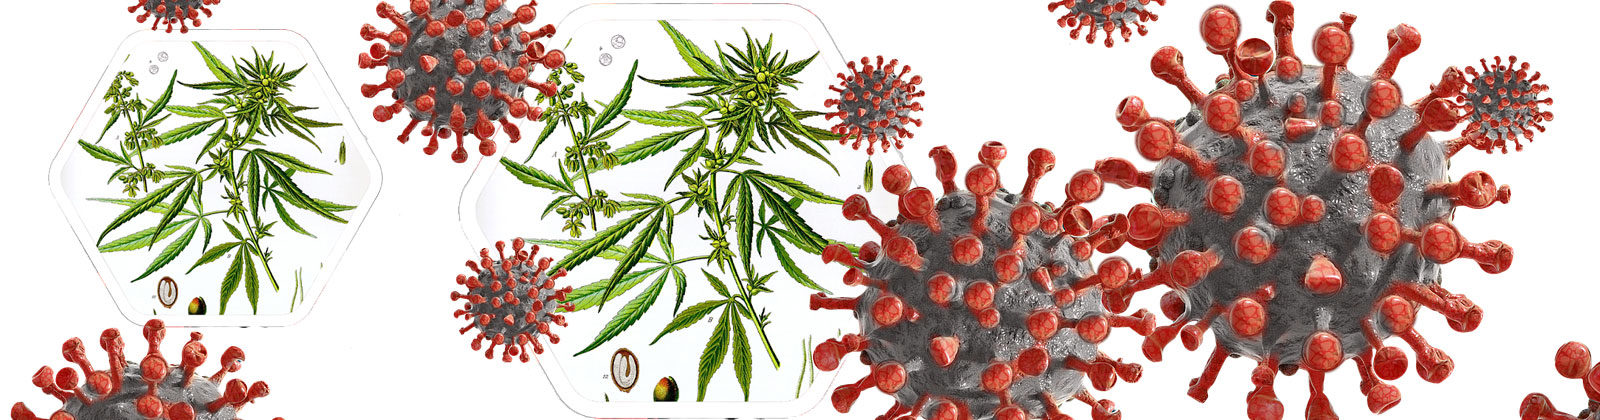 Corona Virus and Cannabis Research